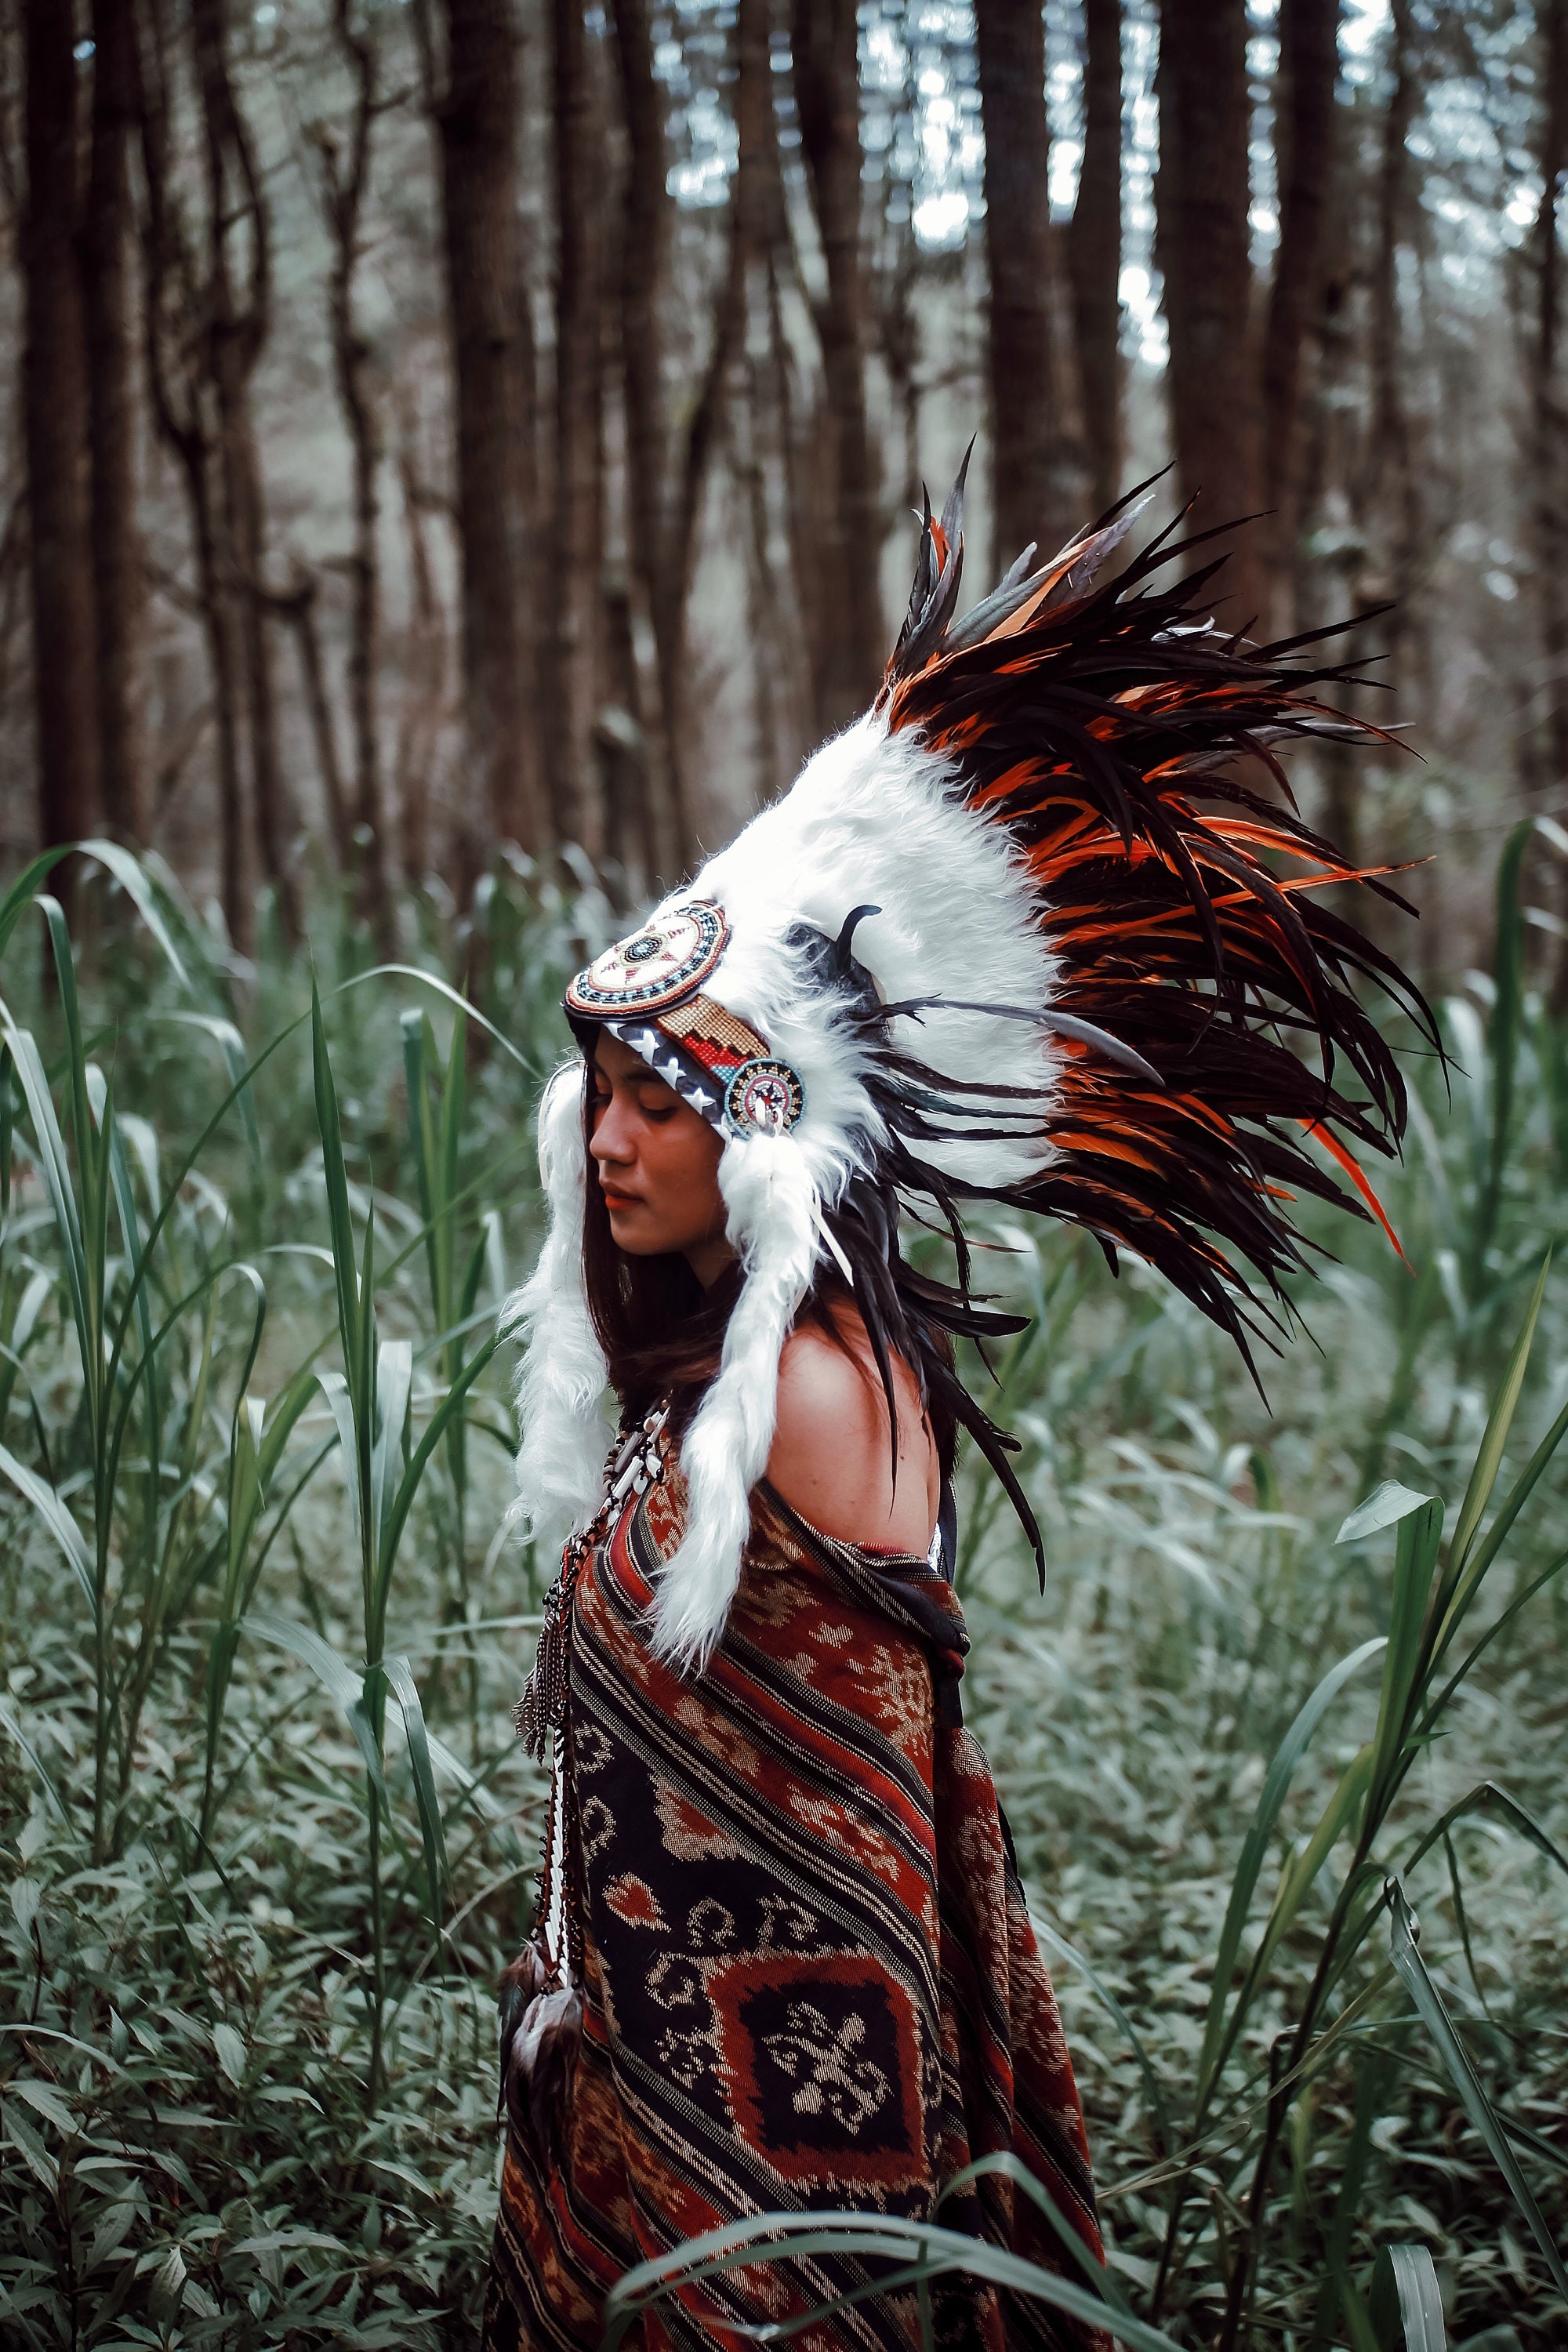 Mohawk nativo rojo, tocado de plumas de traje indio, plumas rojas. Diadema,  sombrero, traje de plumas, tocado inspirado -  México